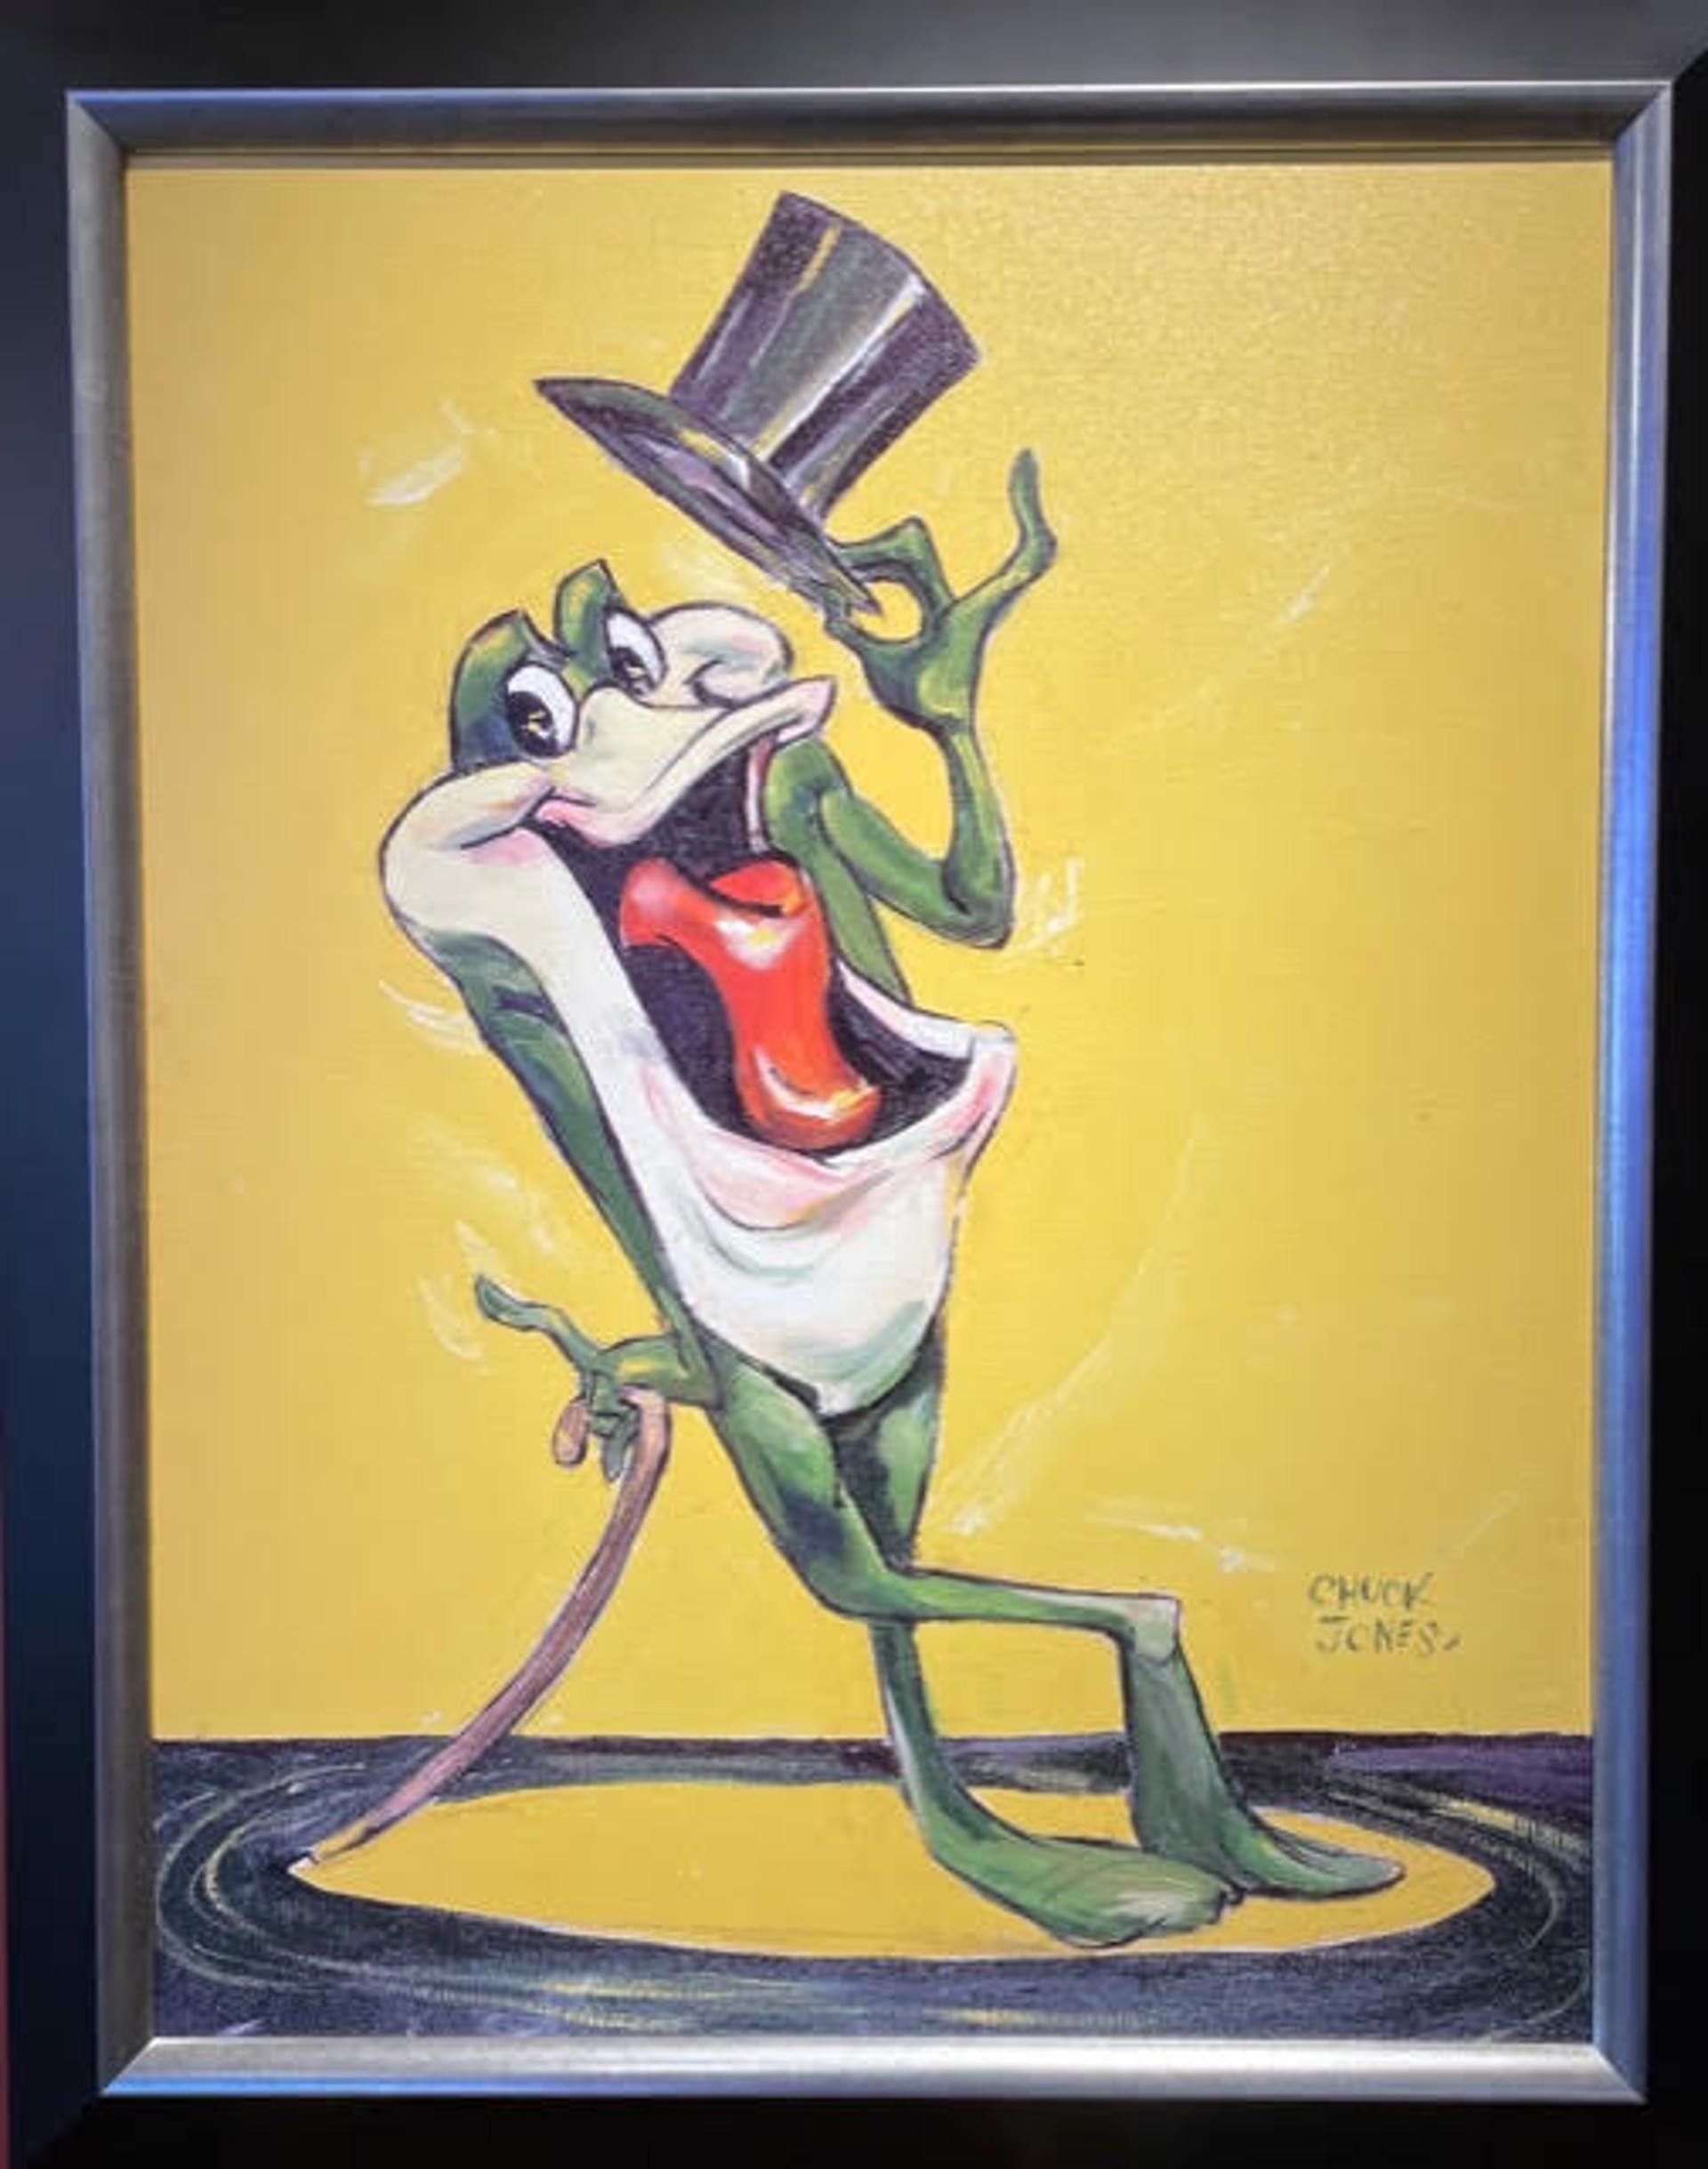 Michigan J. Frog by Chuck Jones